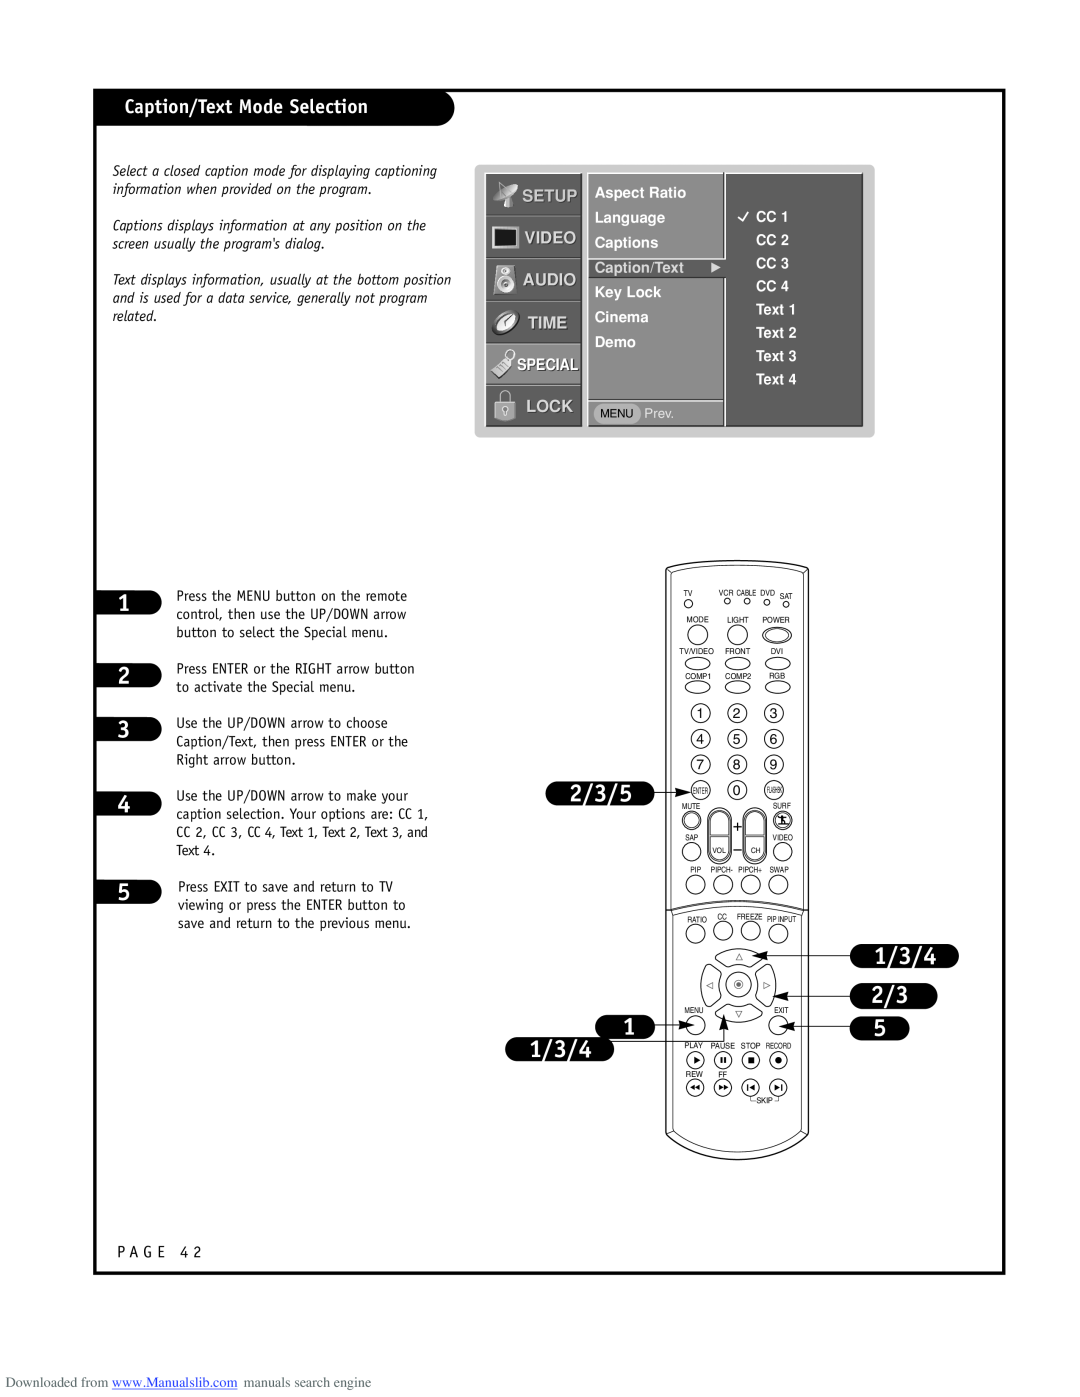 LG Electronics RU-52SZ53D Caption/Text Mode Selection, 1/3/4 2/3, Setup, Video Audio Time, Lock, Special, Caption/Text G 